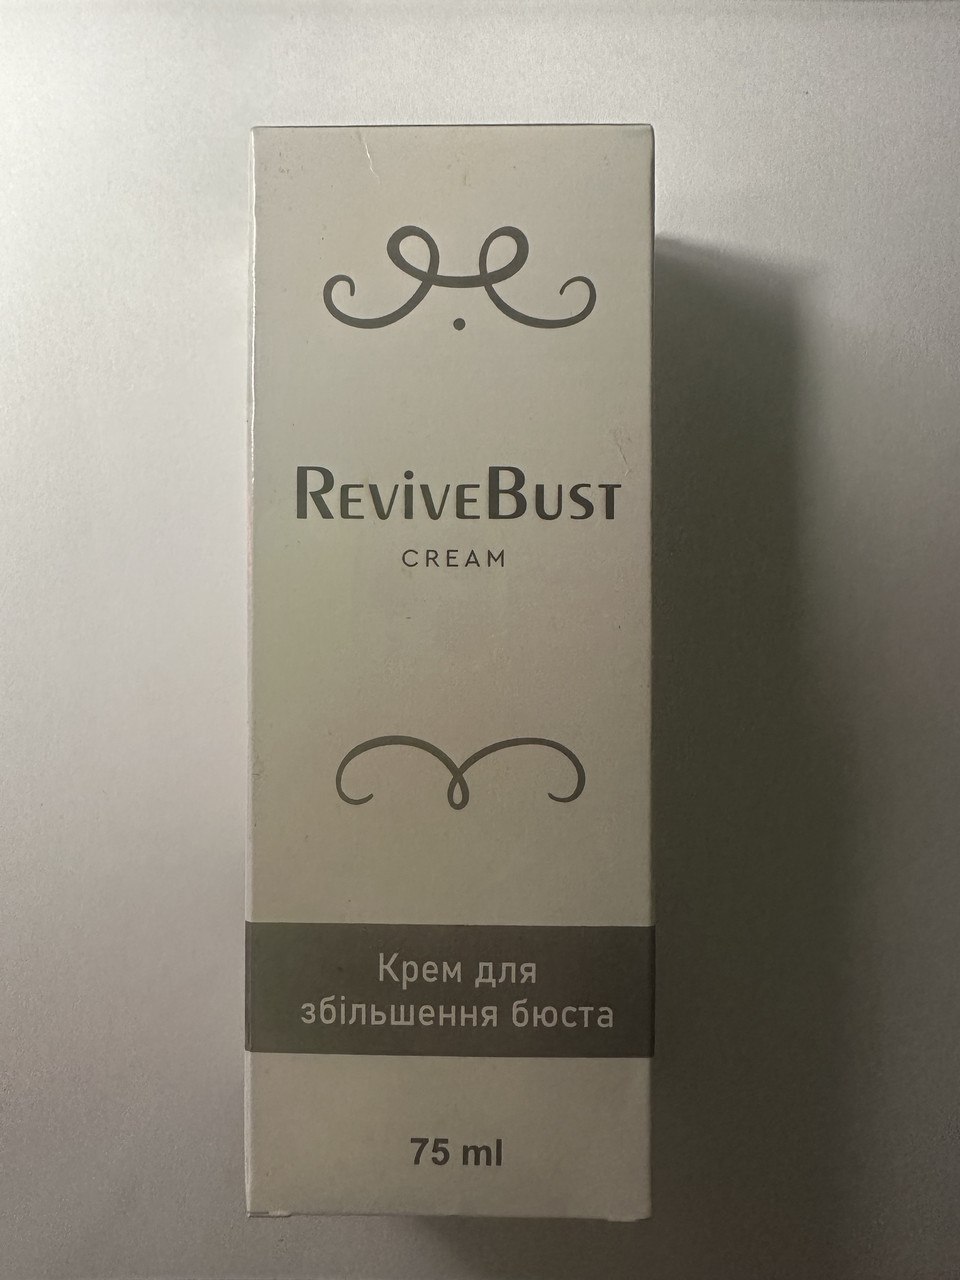 Revive Bust (ревайв бюст) - крем для збільшення бюста, 75 мл.